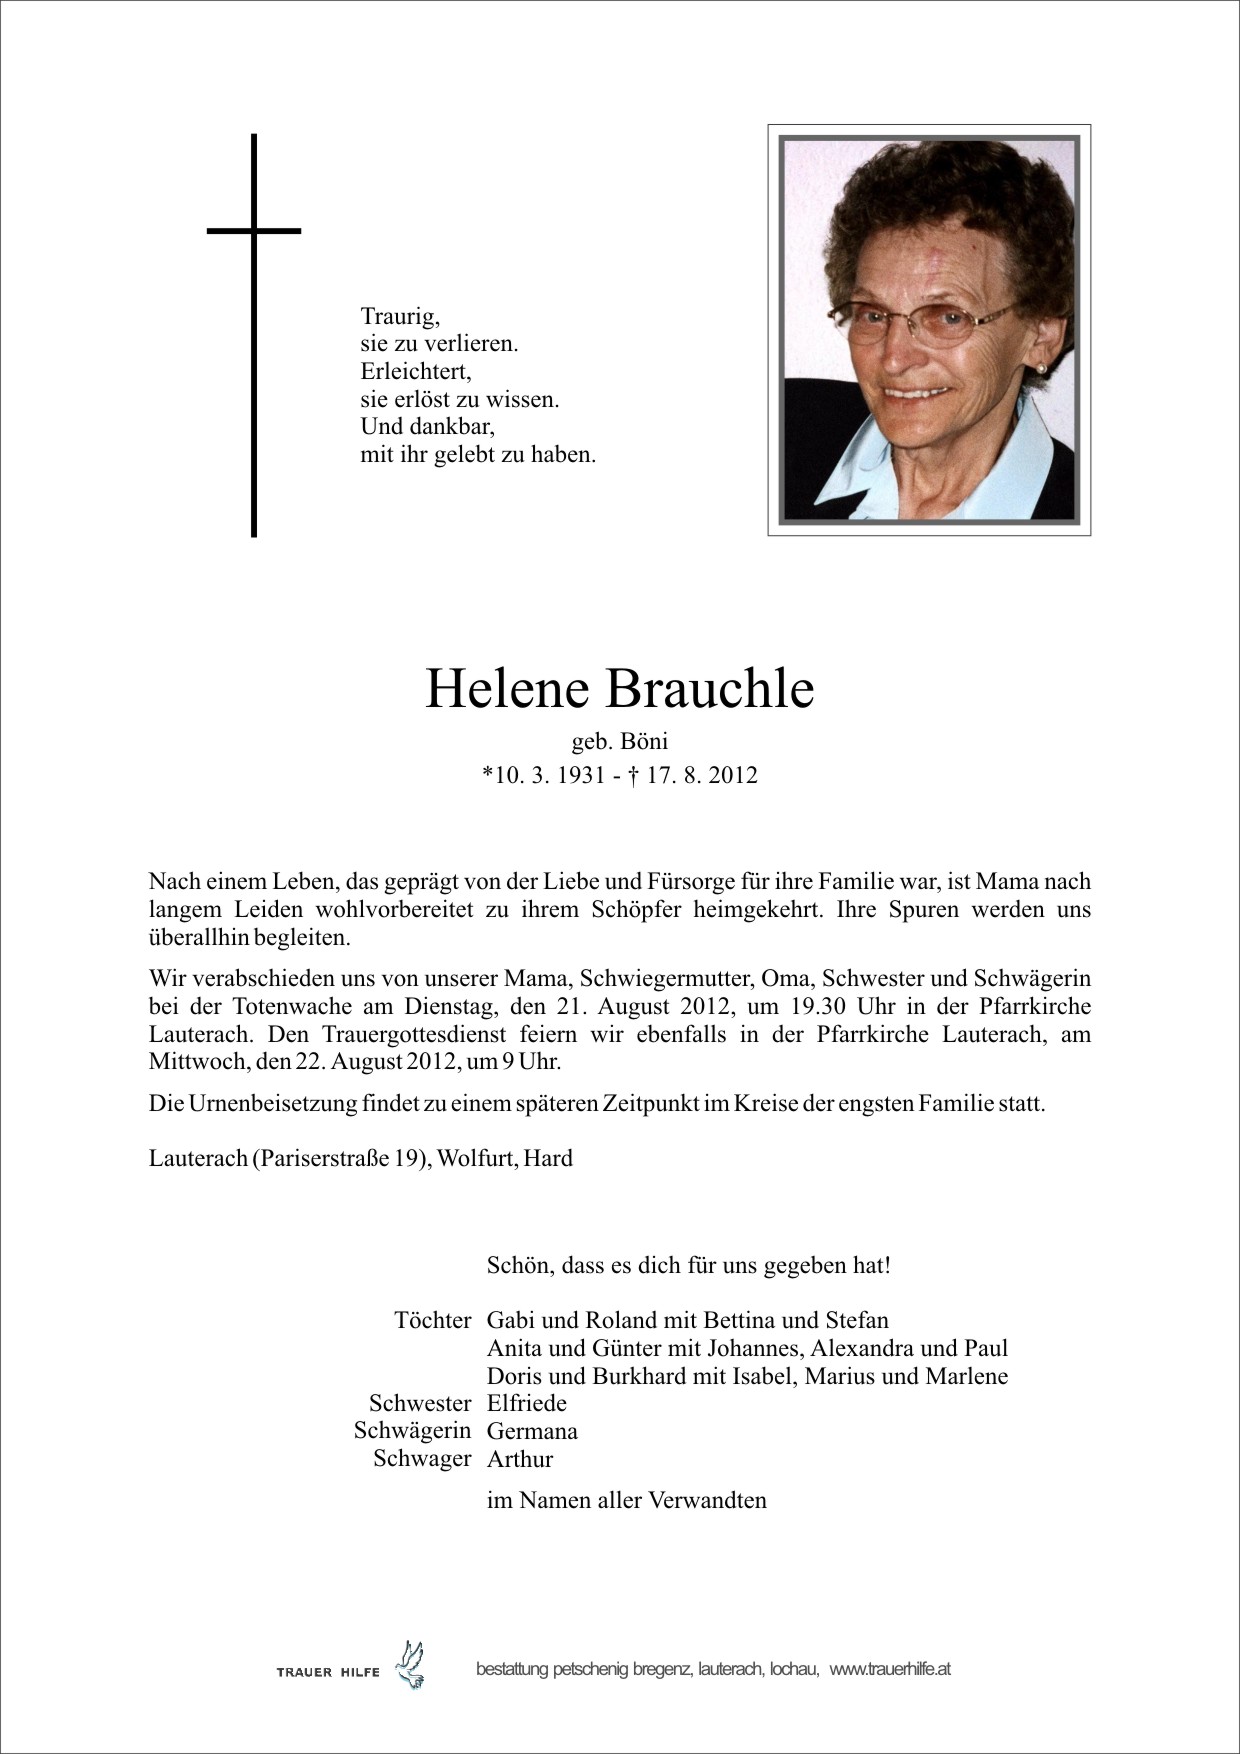 Helene Brauchle